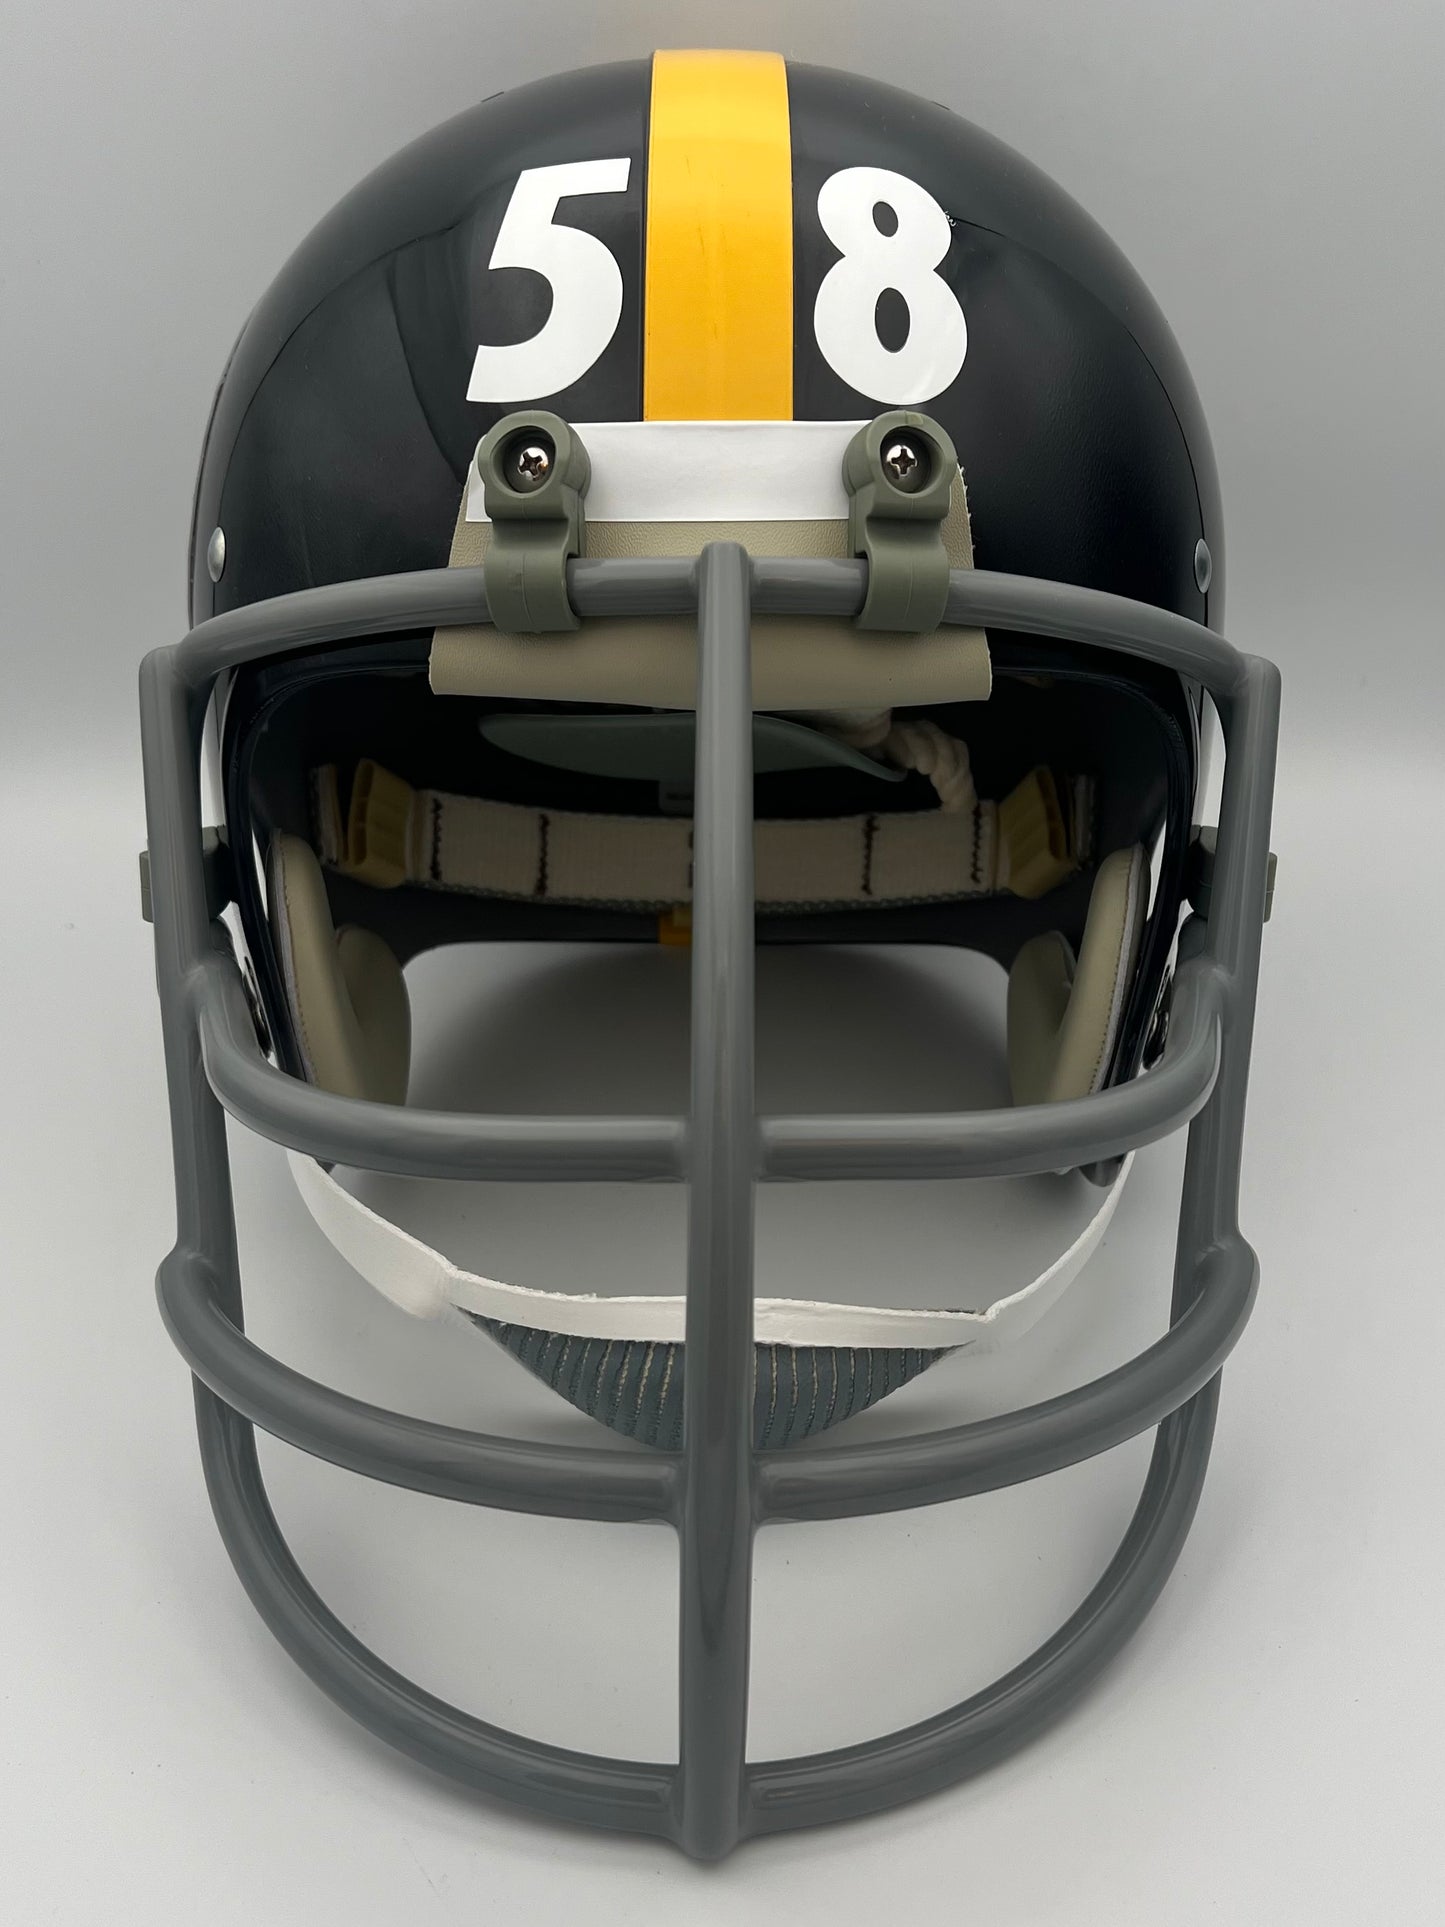 TK2 Style Custom Football Helmet Pittsburgh Steelers Jack Lambert NJOP Facemask Sports Mem, Cards & Fan Shop:Autographs-Original:Football-NFL:Helmets WESTBROOKSPORTSCARDS   